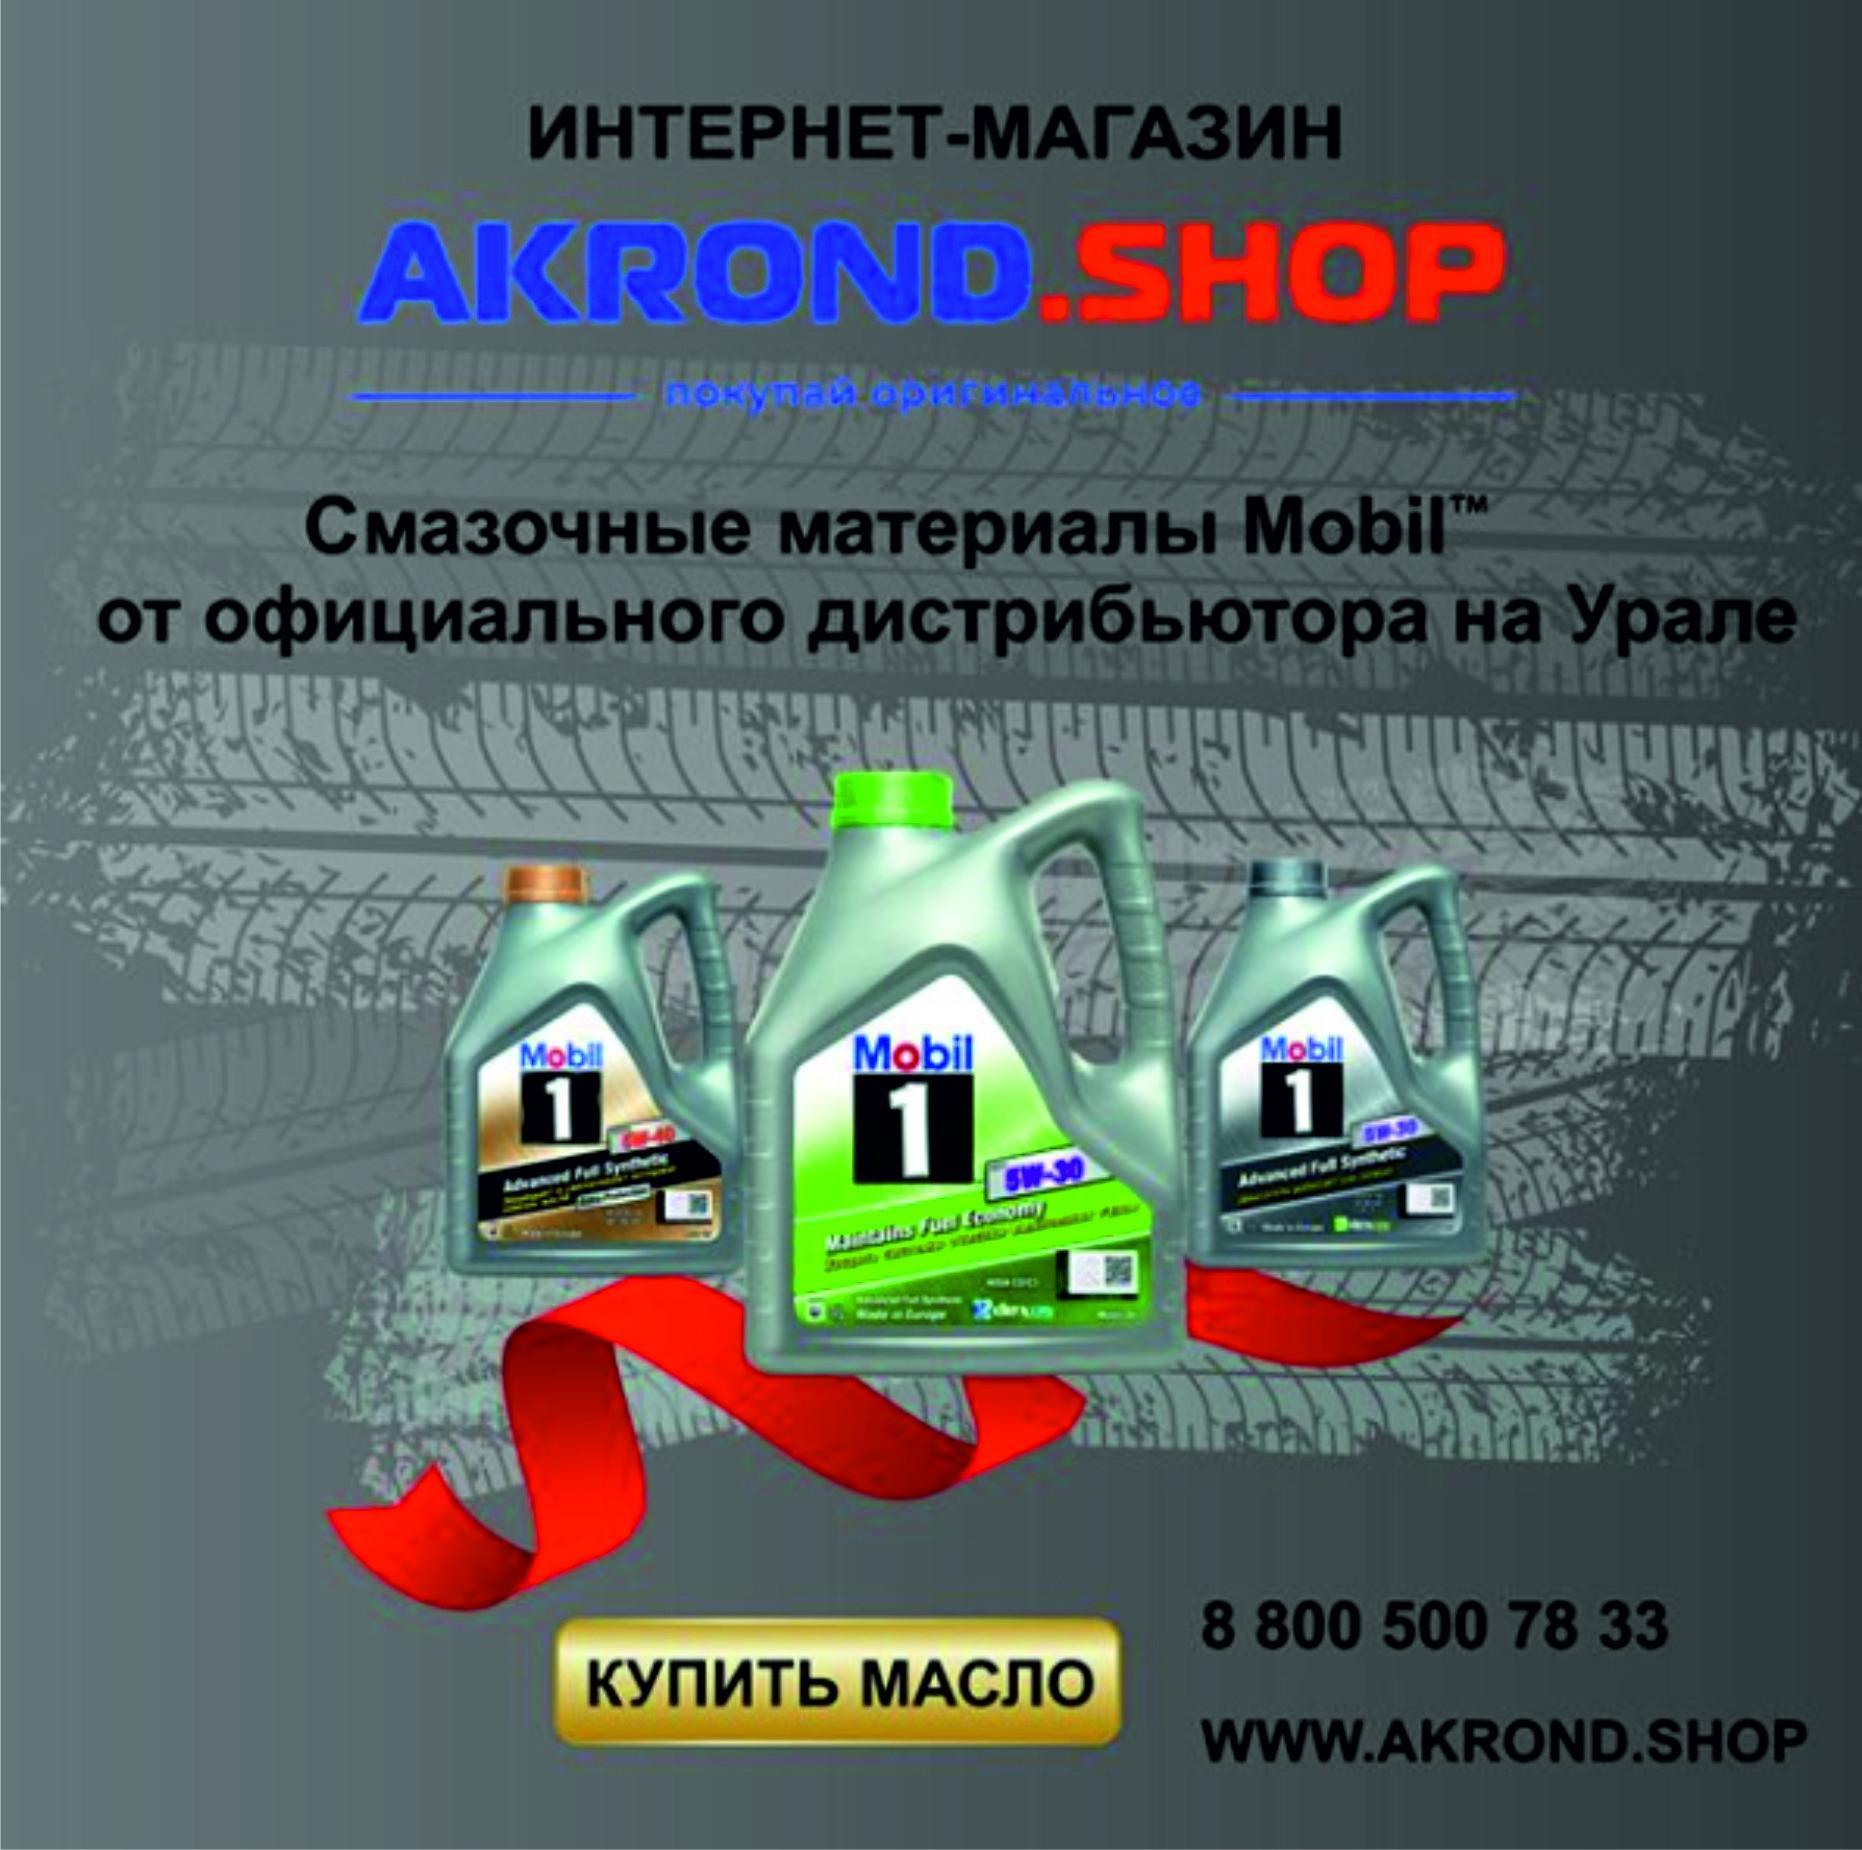 Интернет-магазин Akrond.shop!